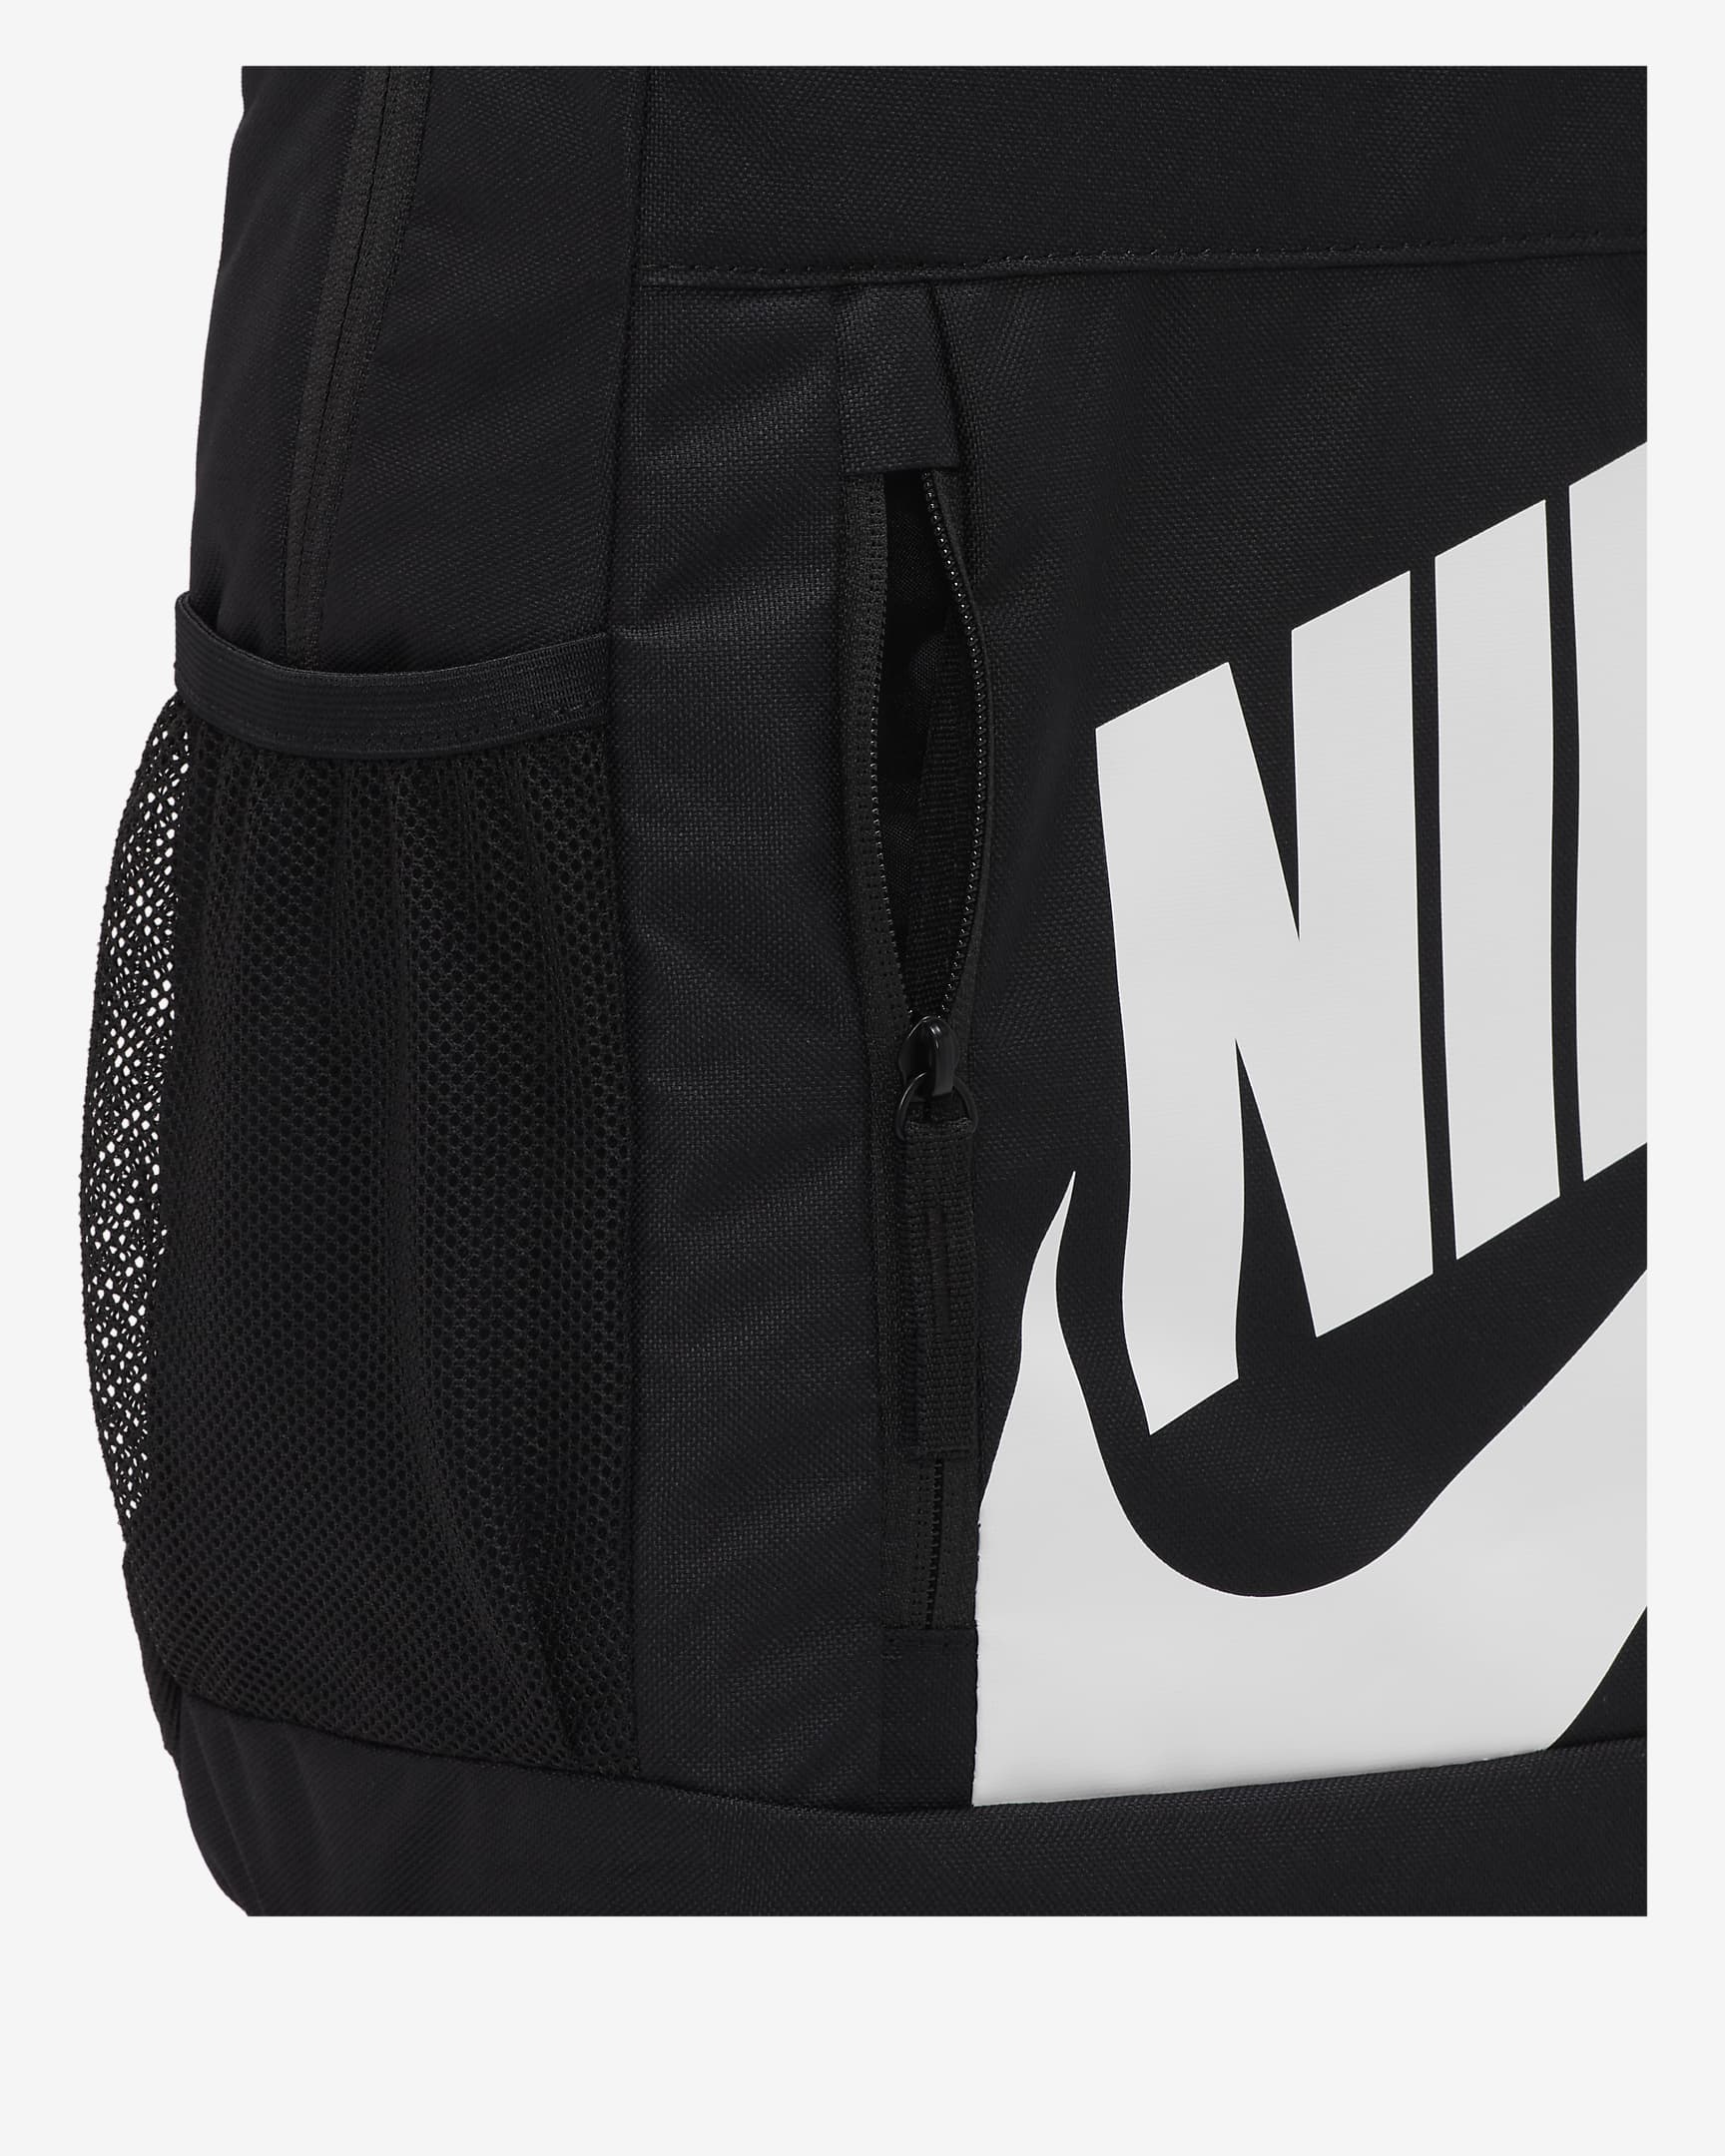 Nike Rugzak voor kids (20 liter) - Zwart/Zwart/Wit